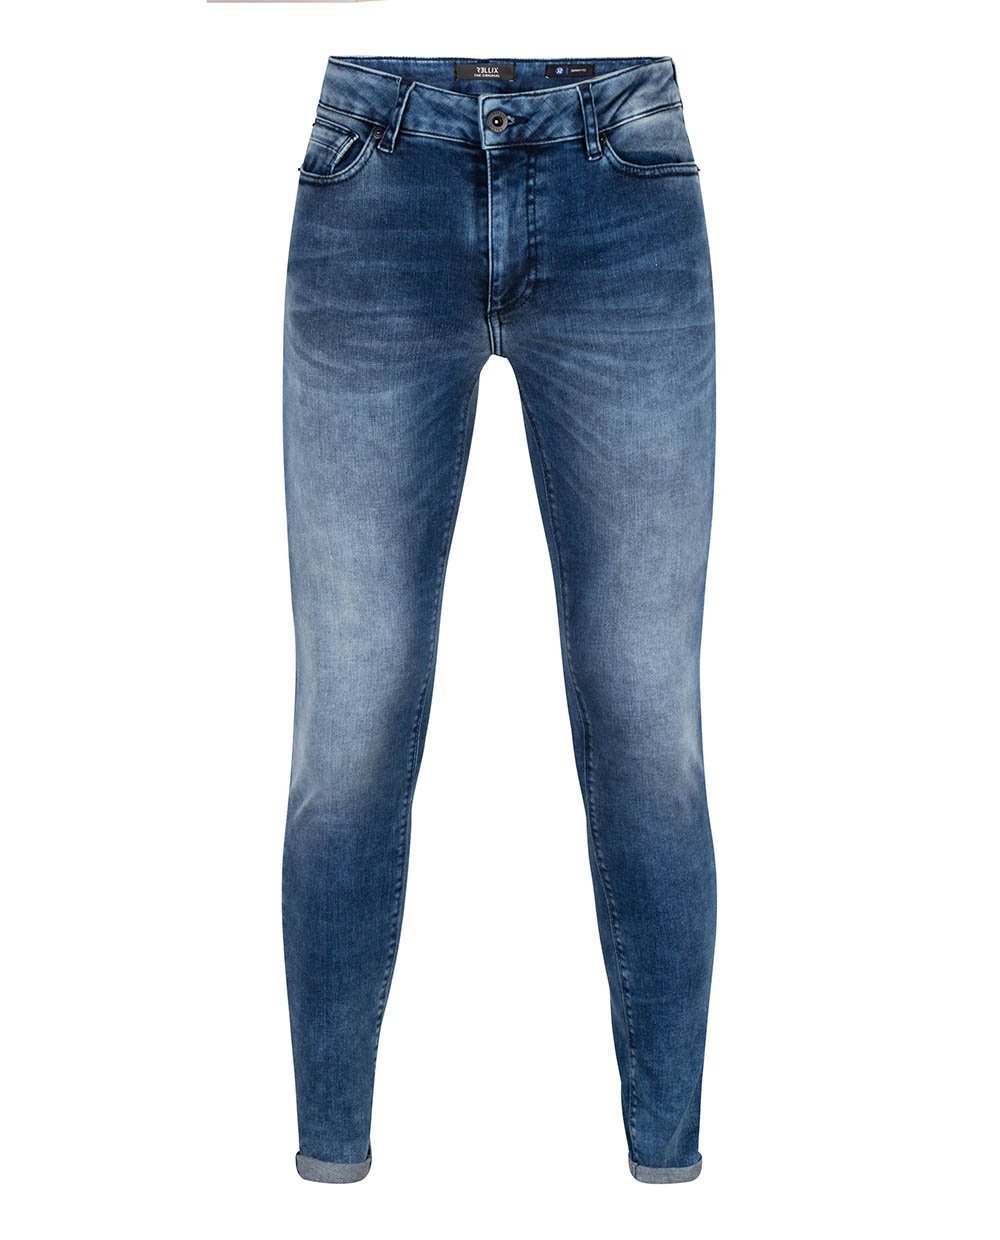 Jongens Jeans Xyan Skinny Used Medium Denim van Rellix in de kleur Used Medium Denim in maat 176.